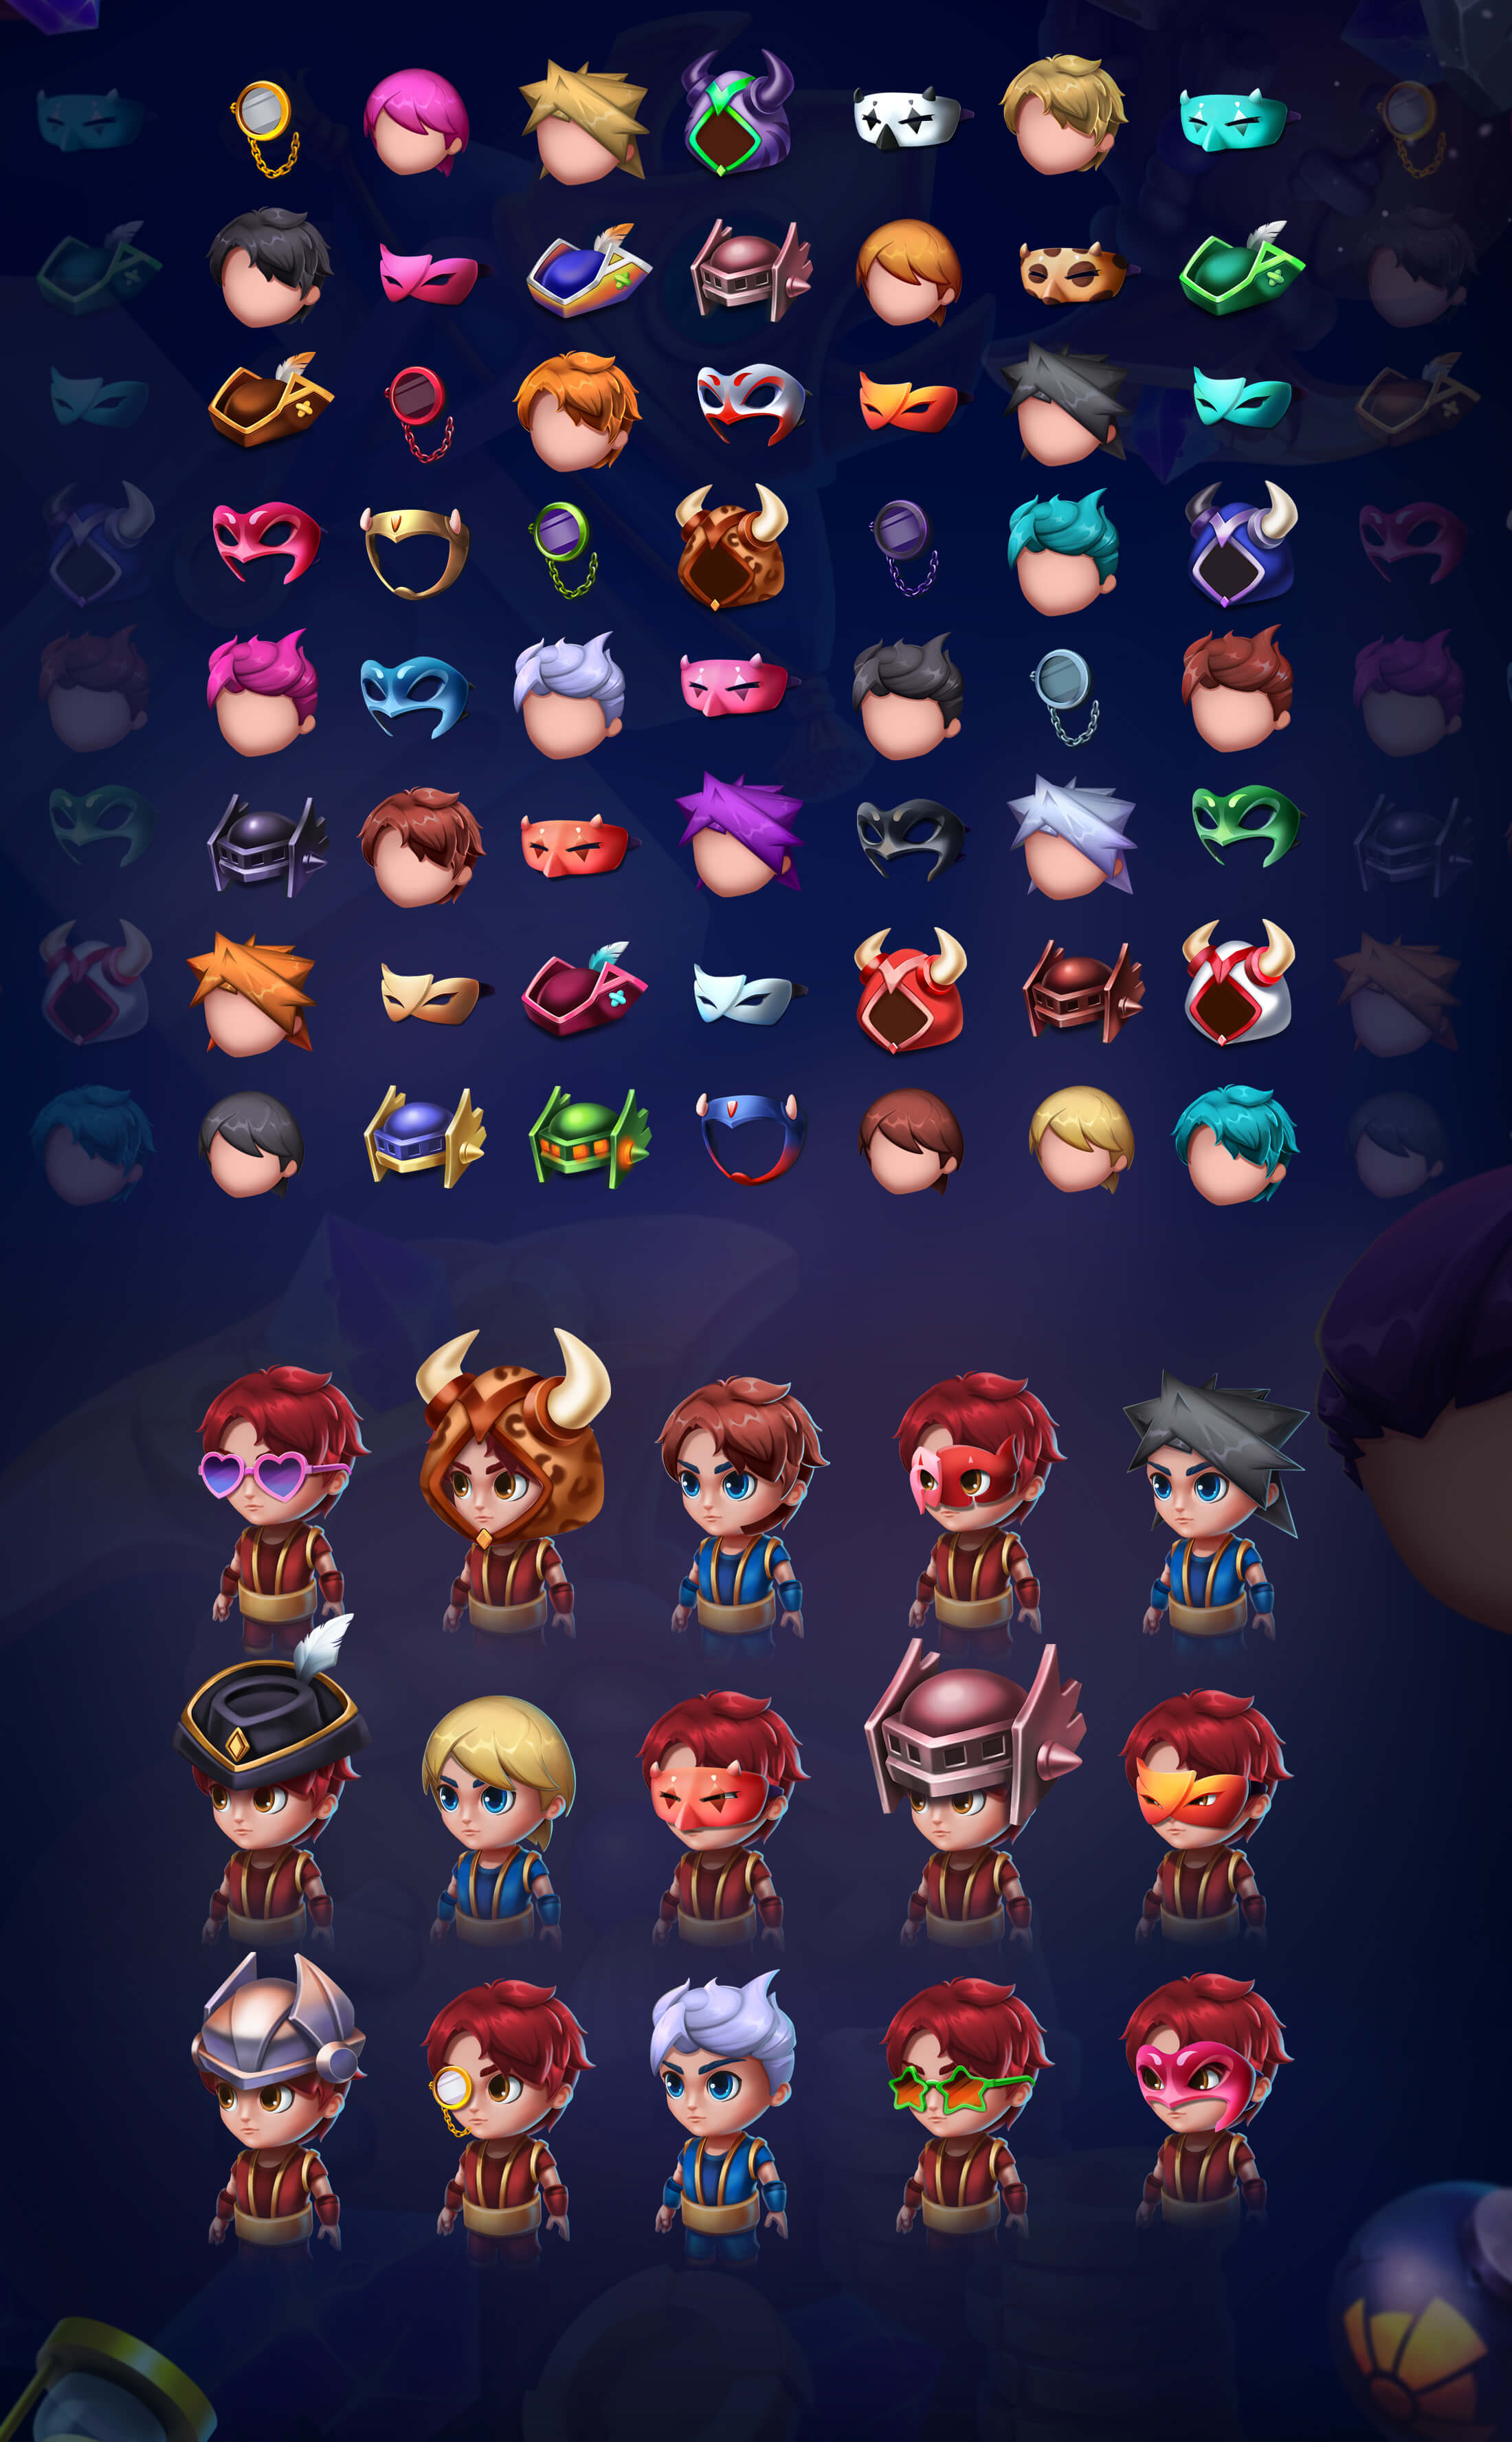 RPS Battle characters design